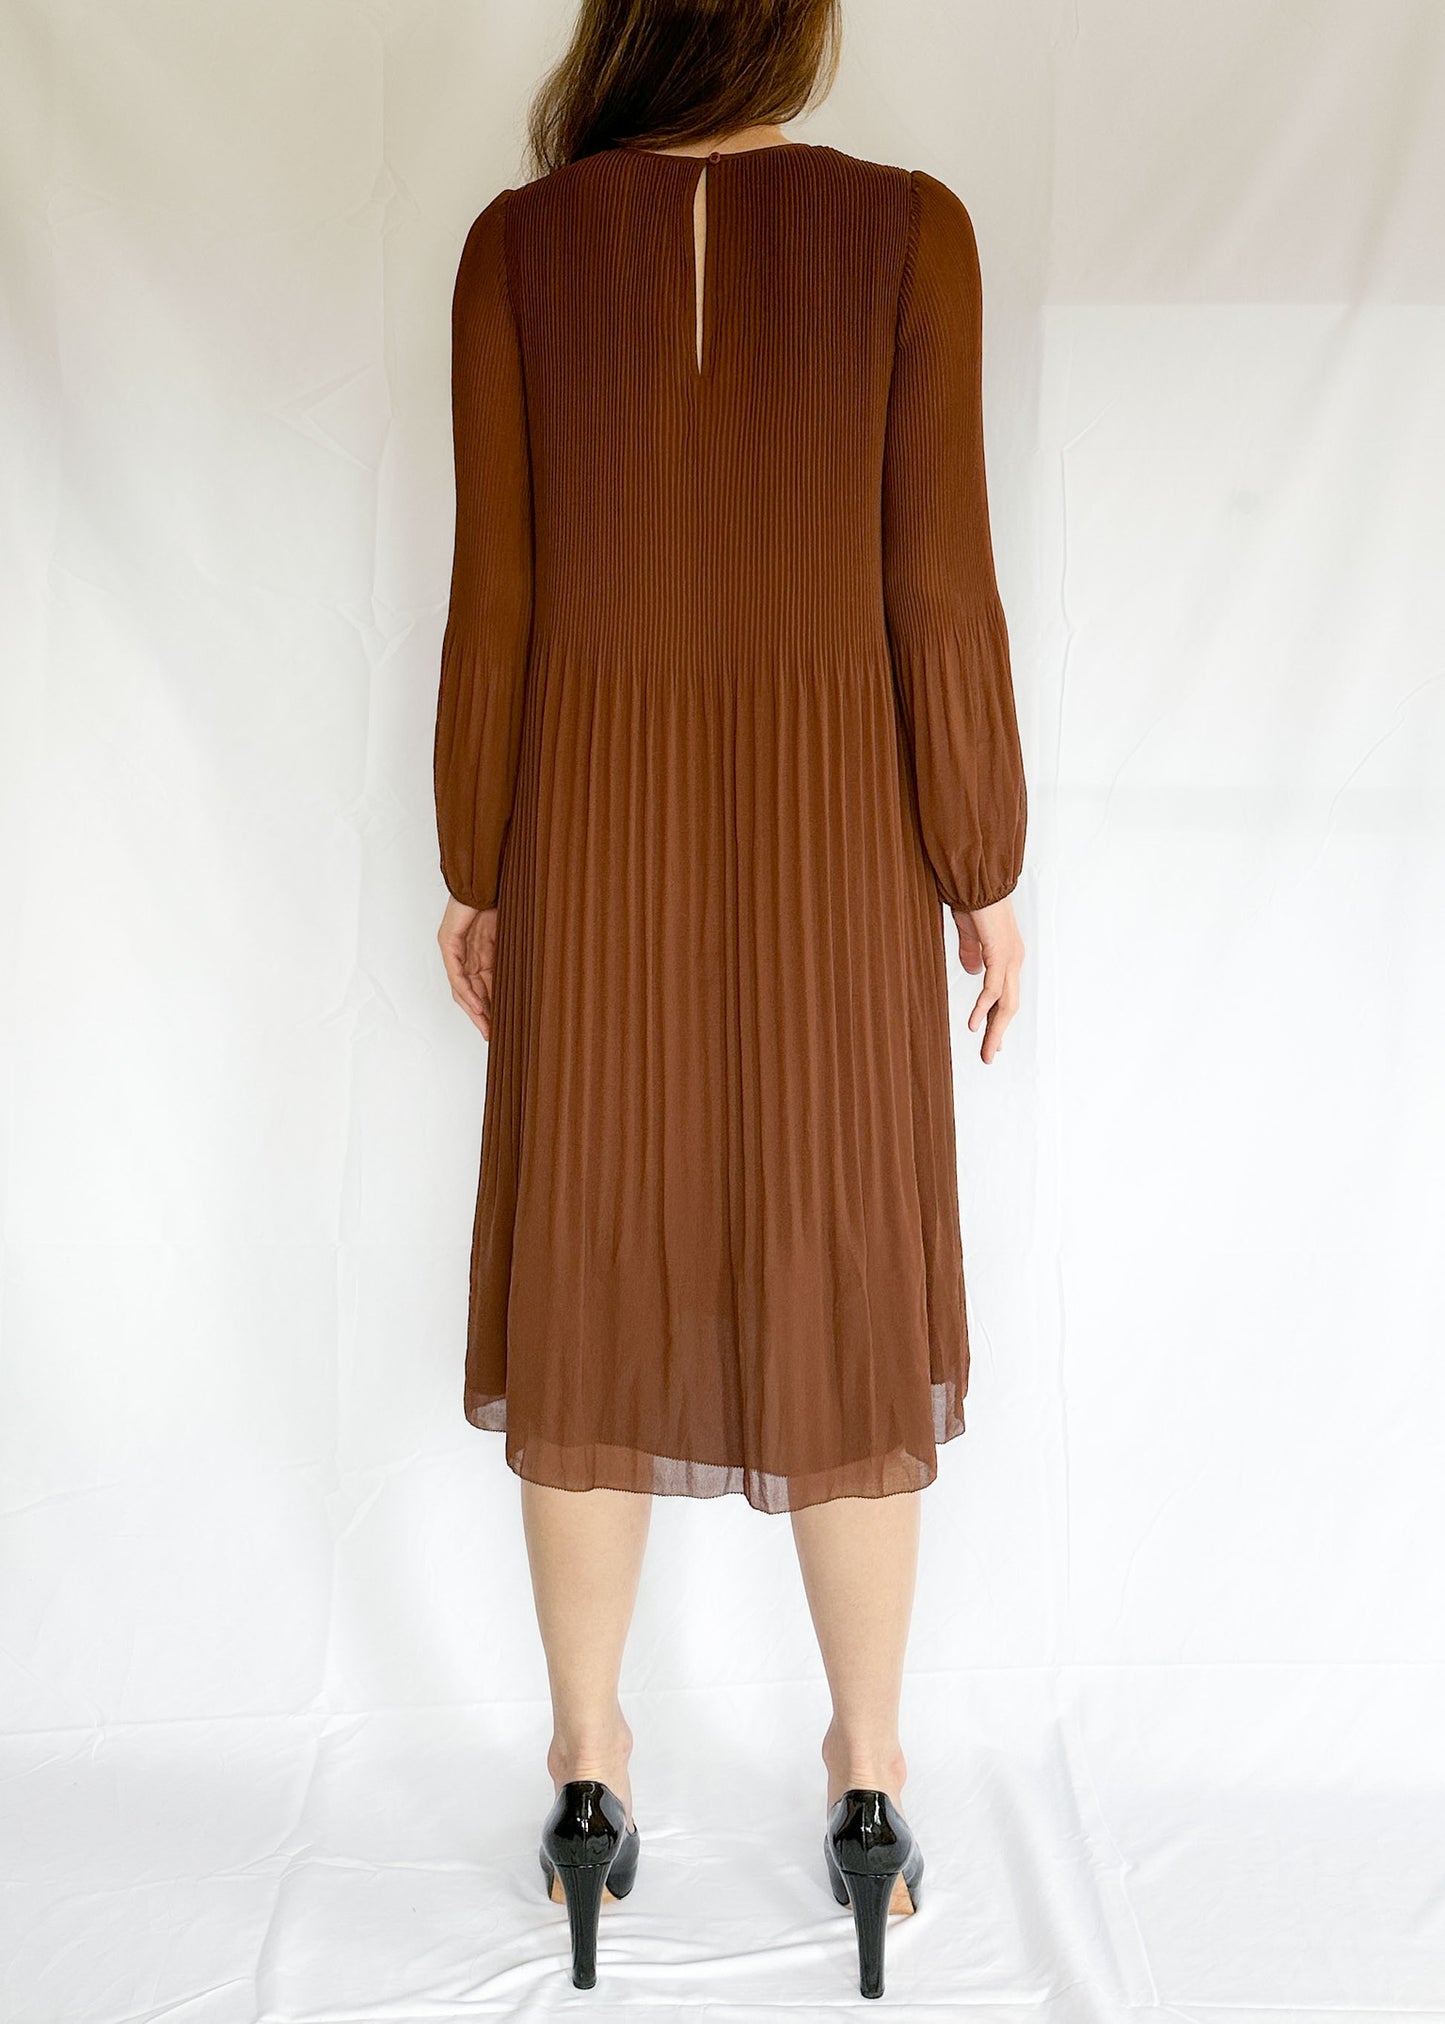 Wilfred Brown Daydreamer Midi Dress Size M